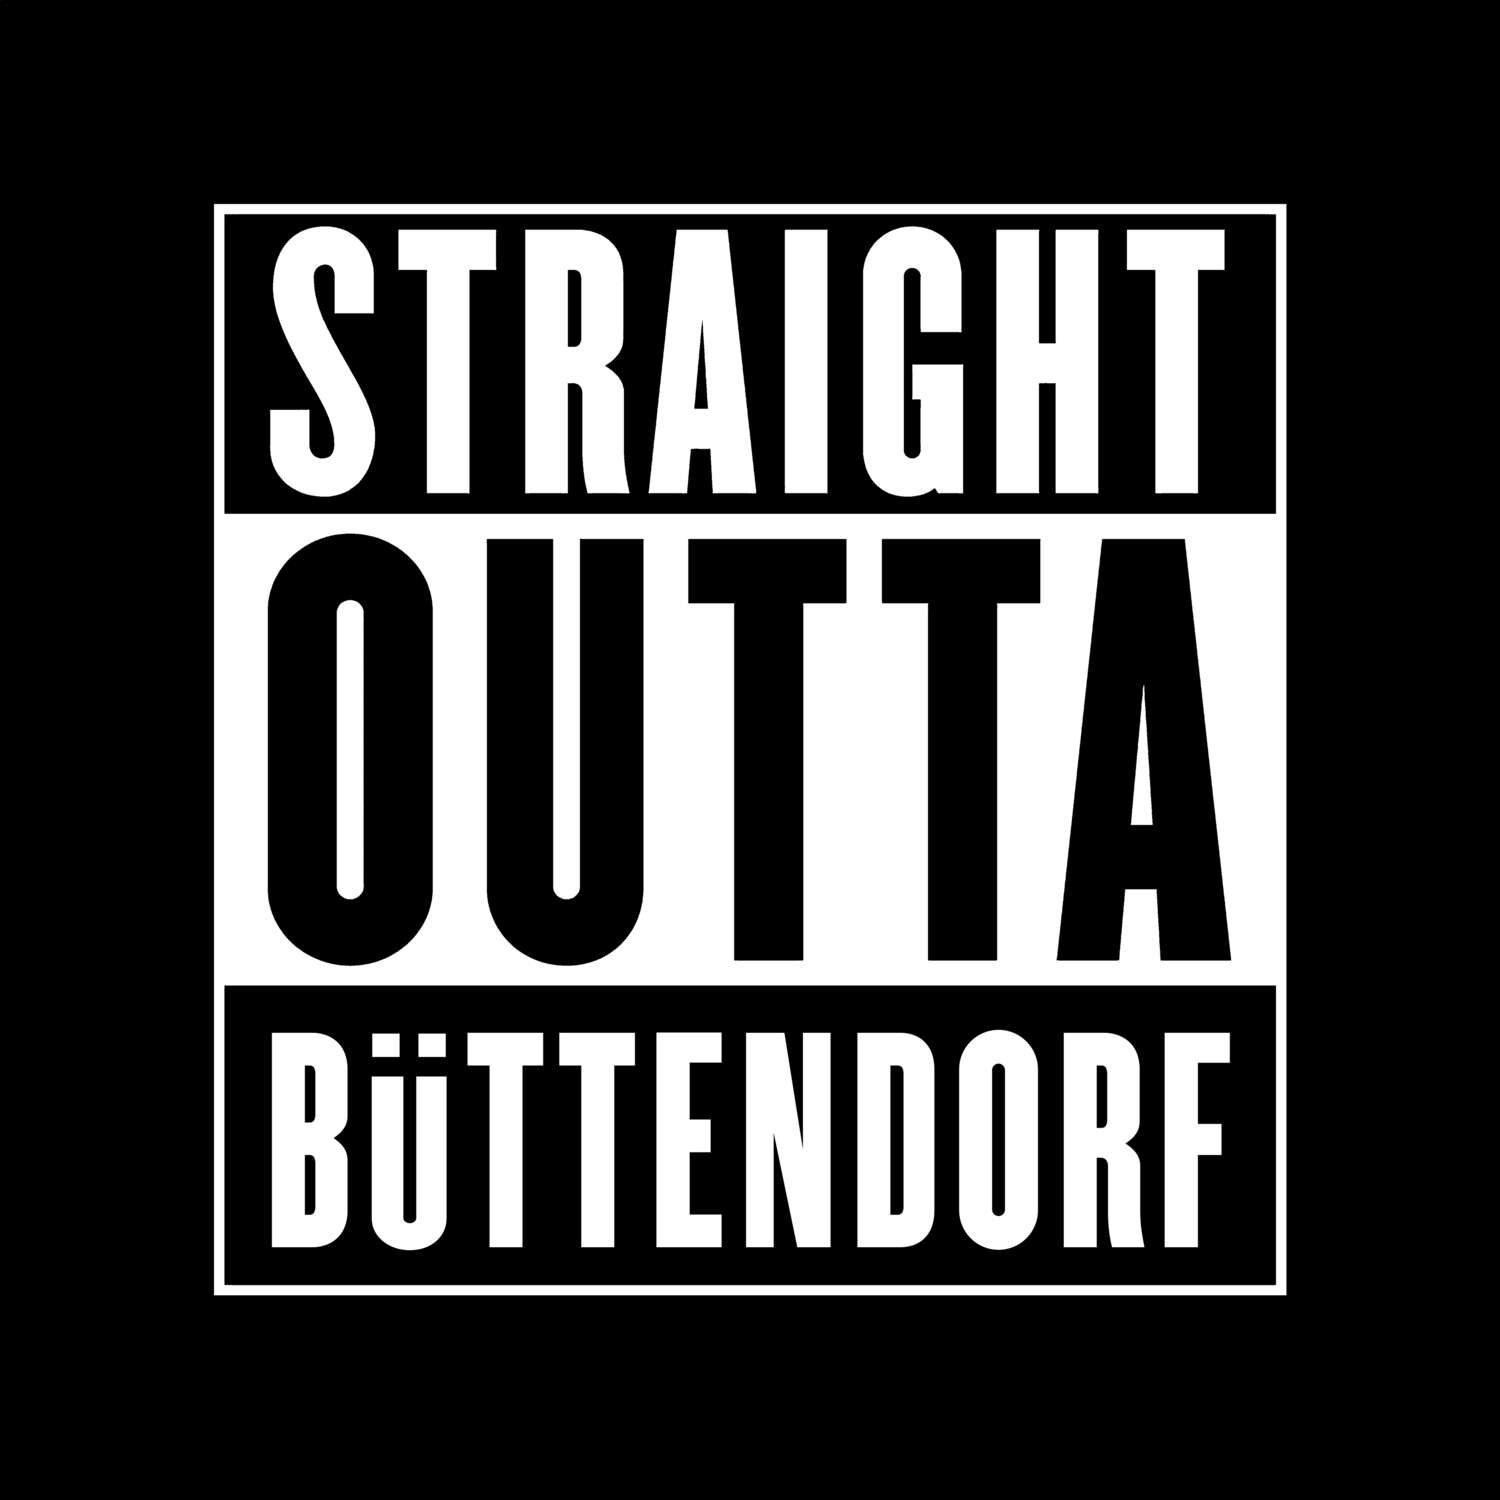 Büttendorf T-Shirt »Straight Outta«